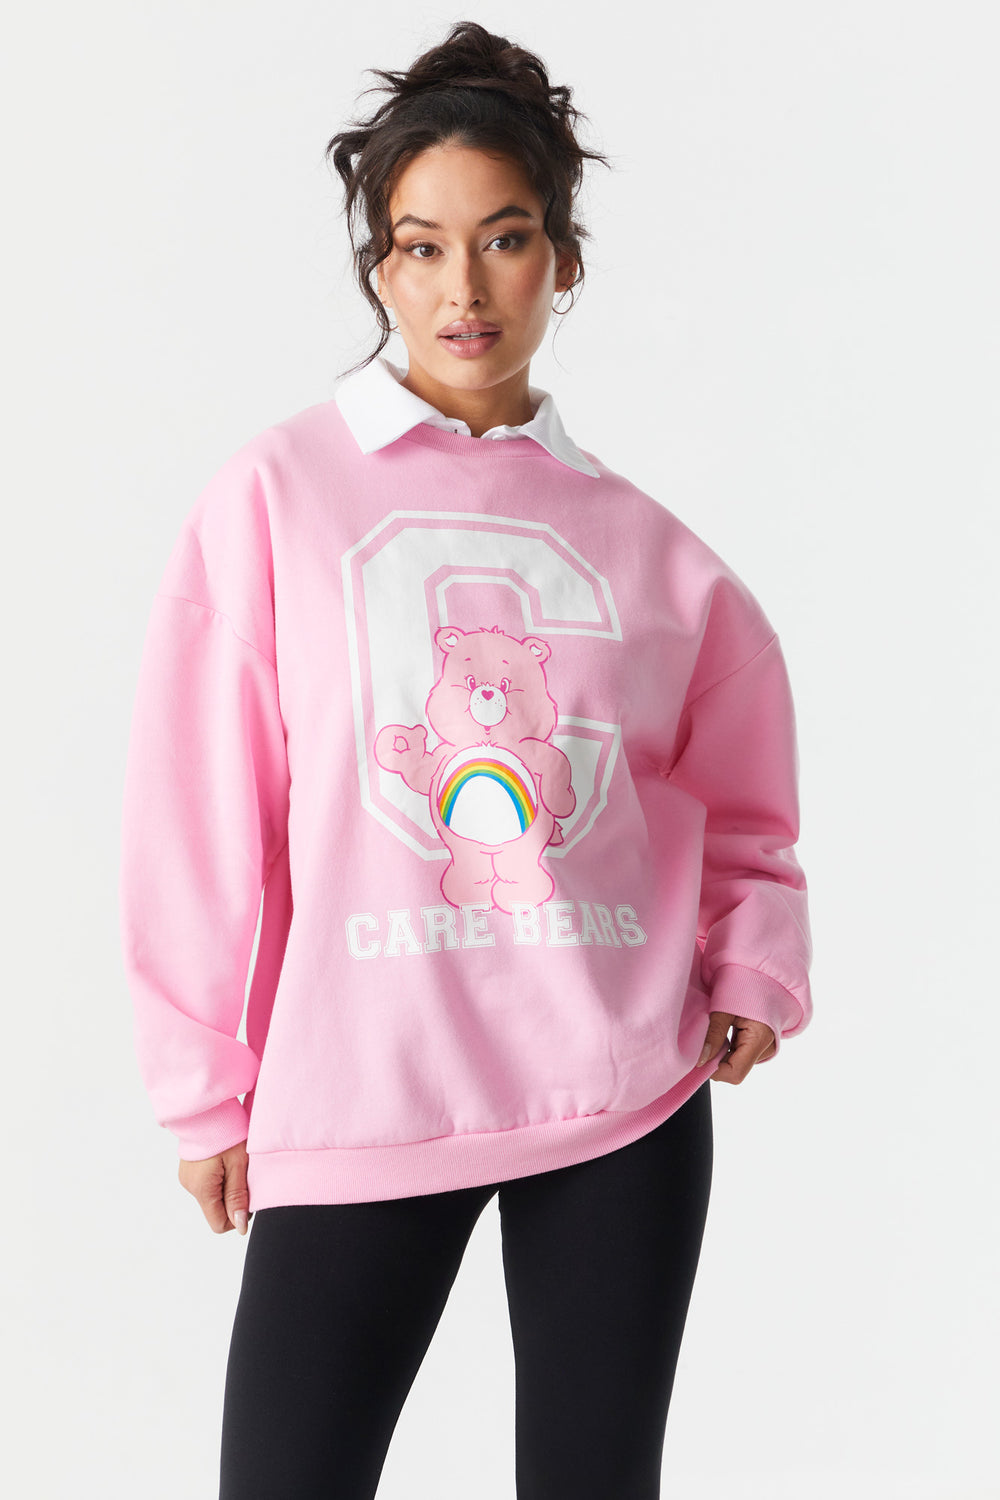 Care Bears Graphic Fleece Sweatshirt Pink